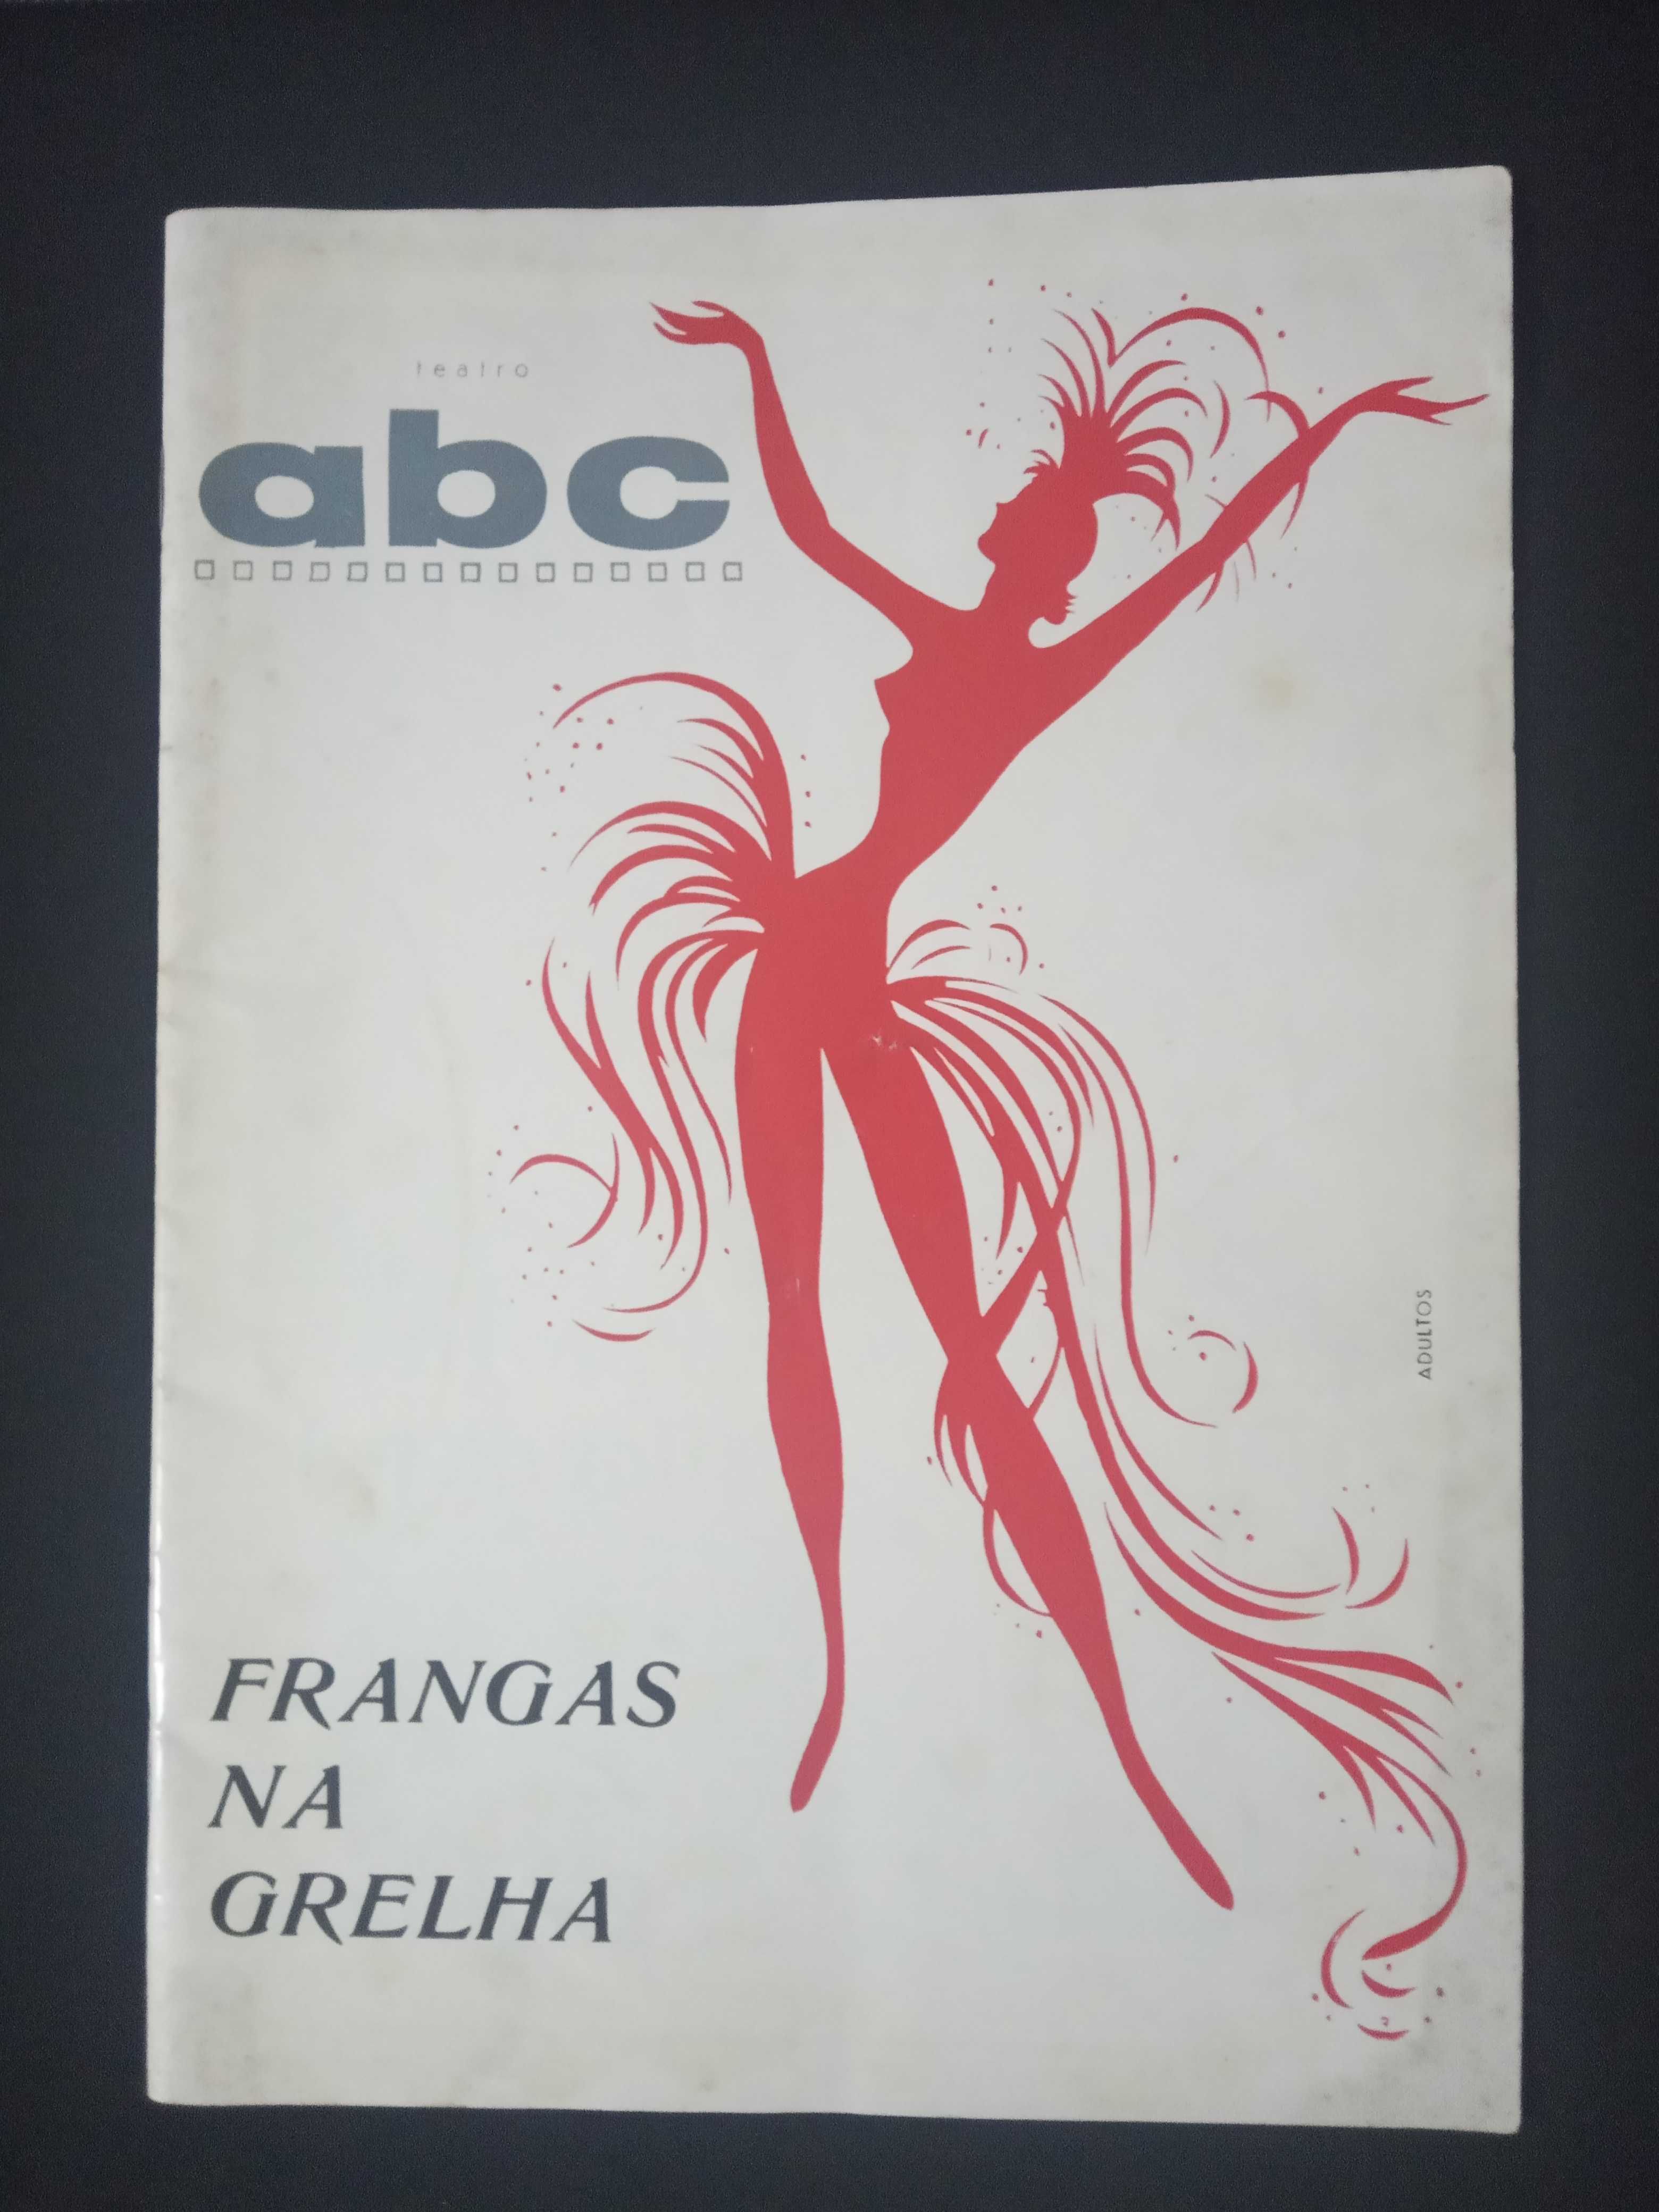 Teatro ABC, 1971 - Revista "Frangas na Grelha"